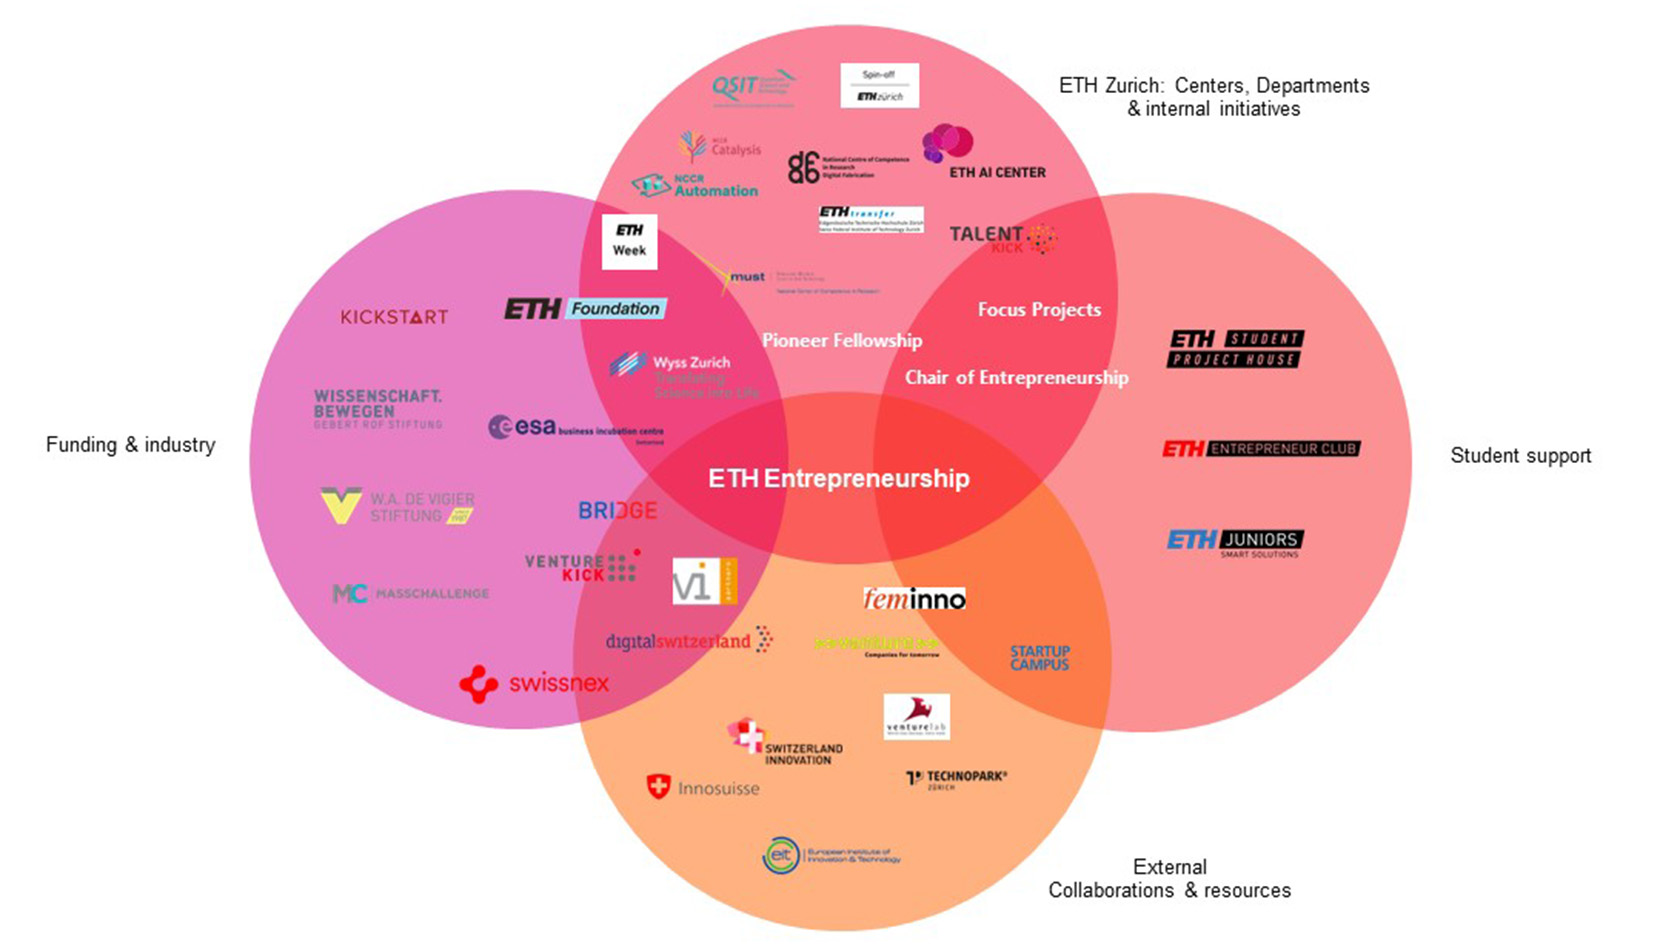 Enlarged view: Entrepreneurship Ecosystem at ETH